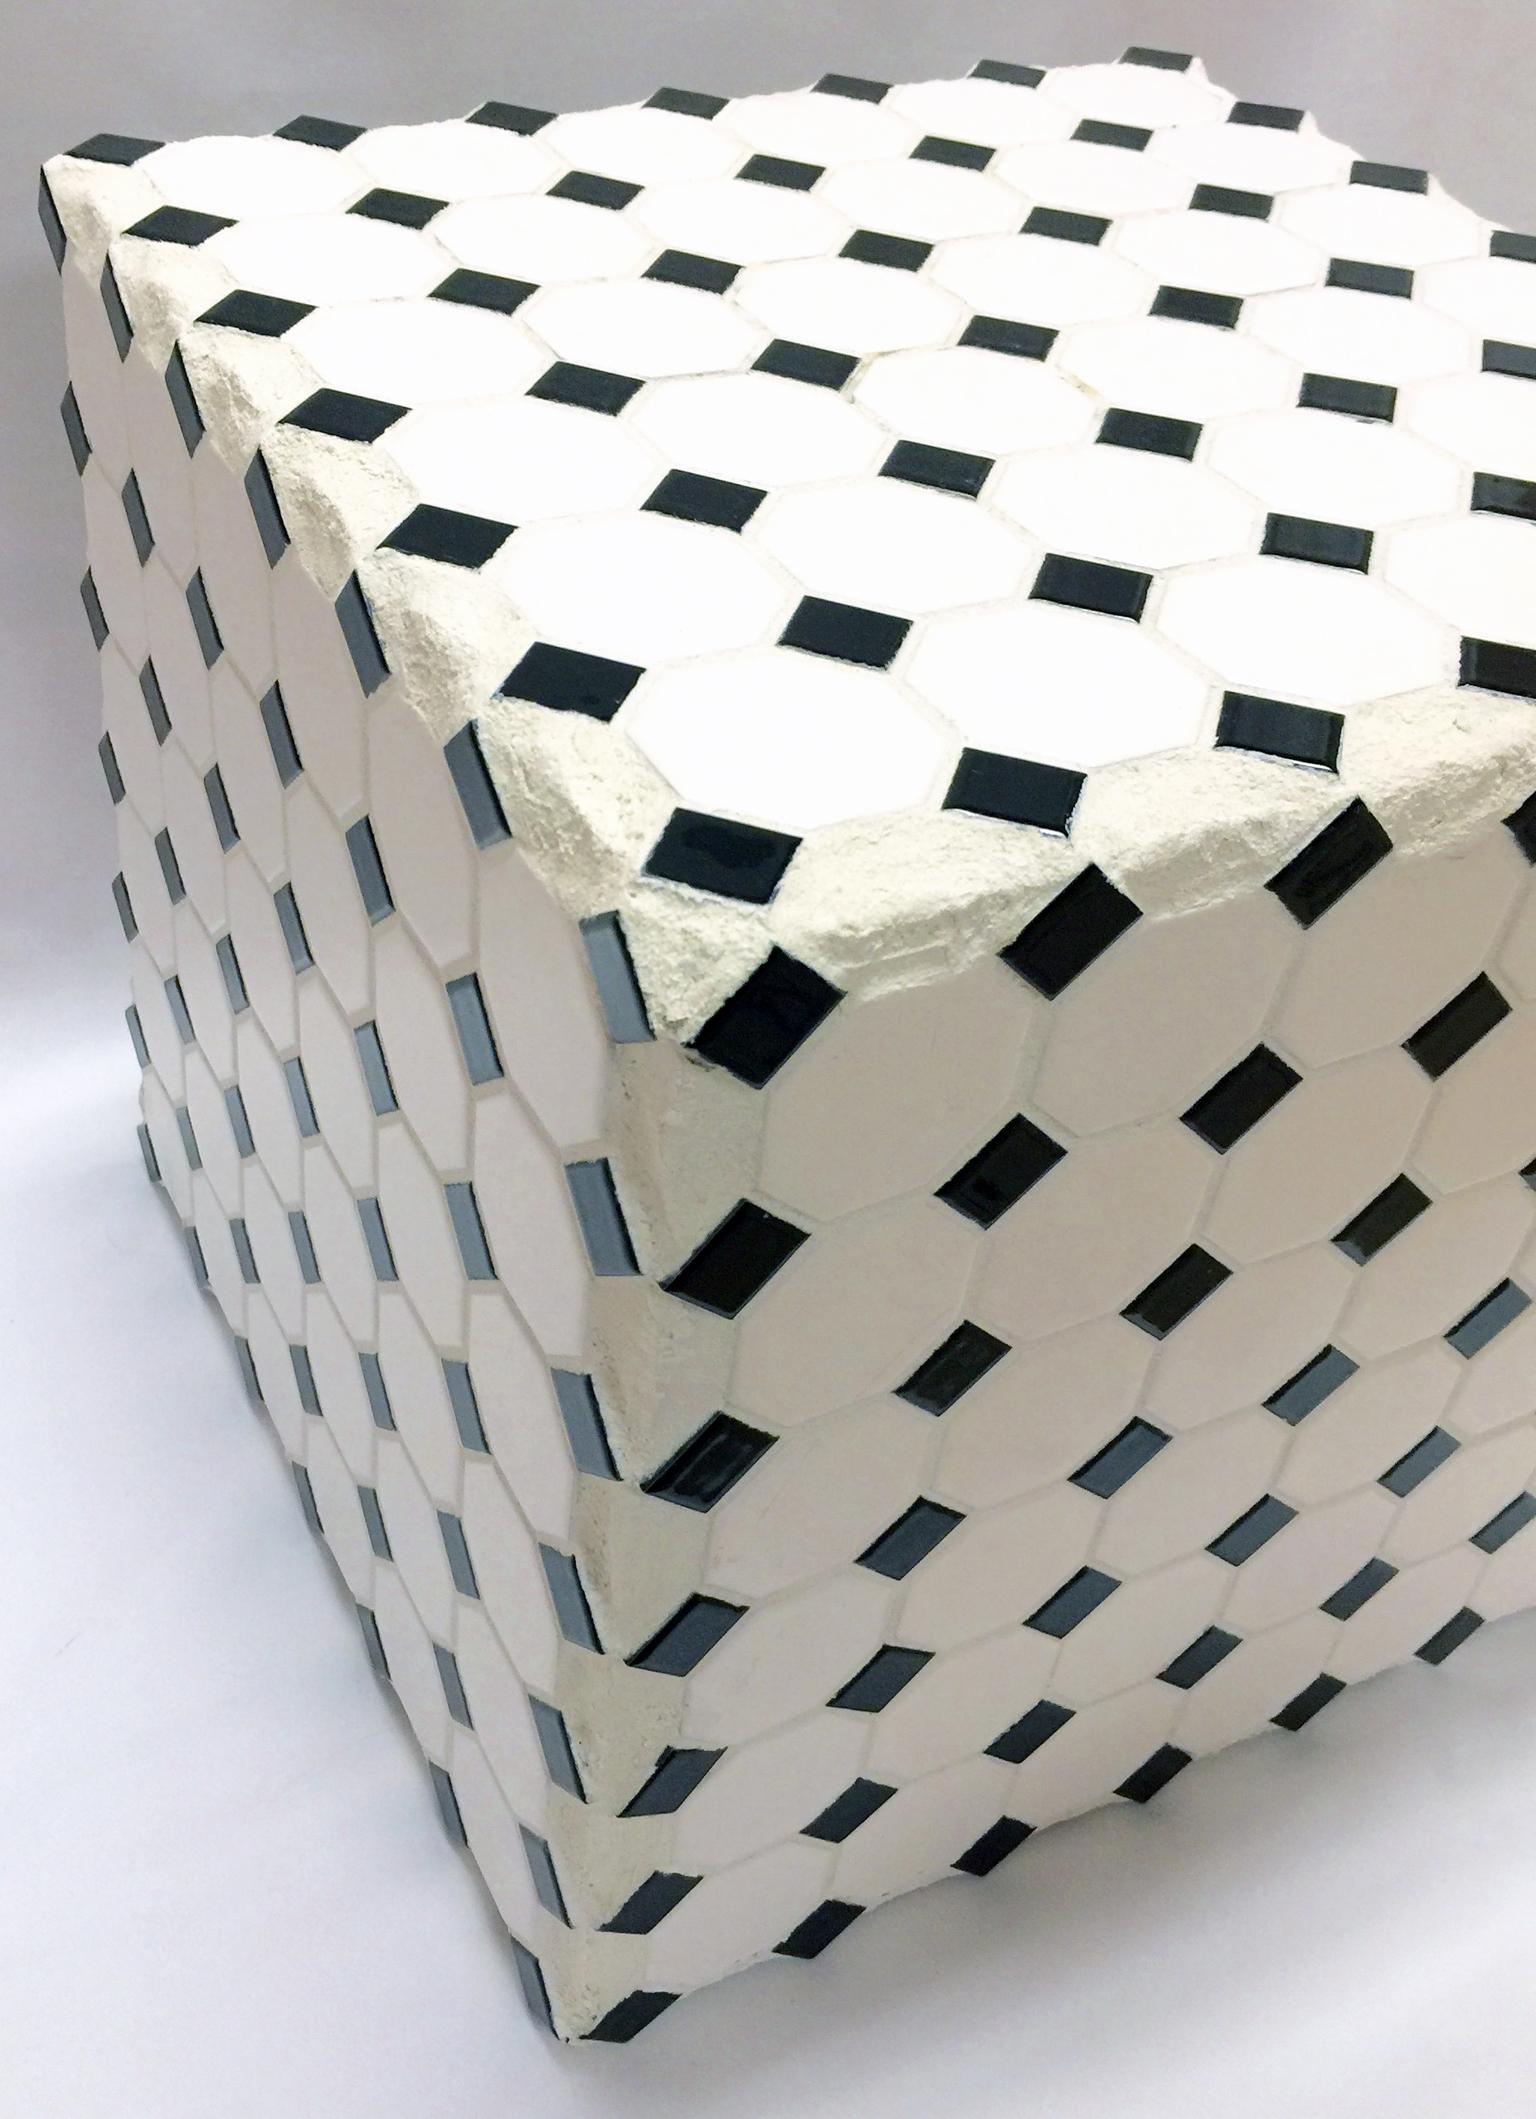 Black and White Diamond (Cube Table) - Abstract Geometric Mixed Media Art by Kristina Larson